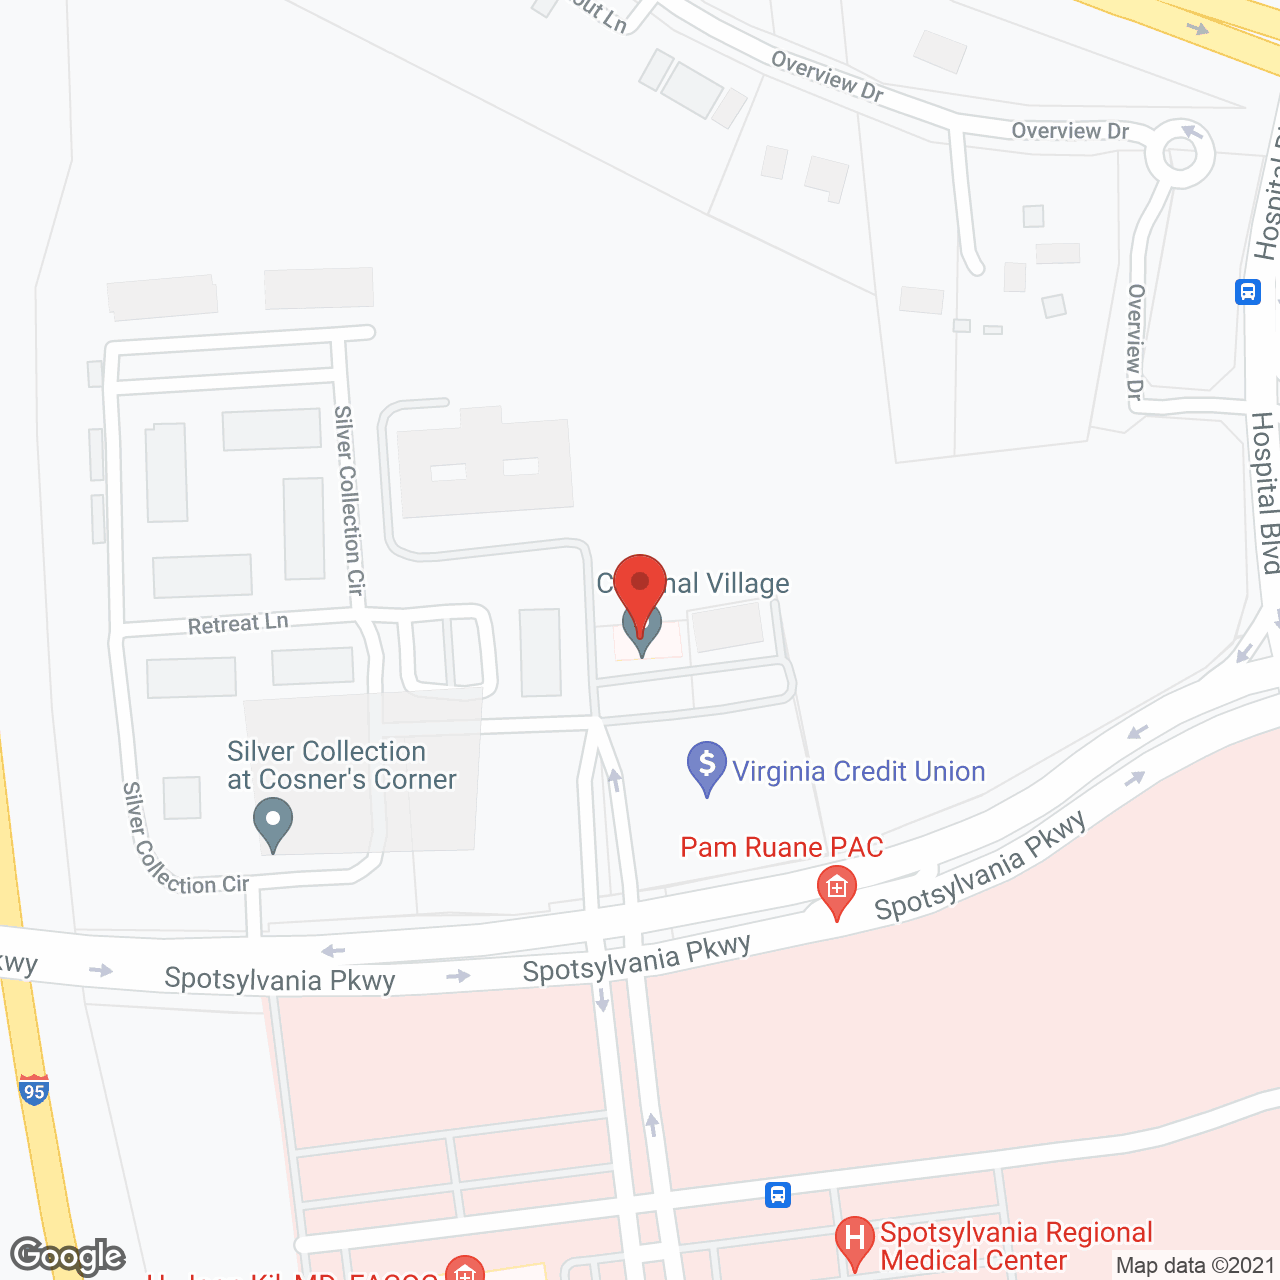 Cardinal Village in google map